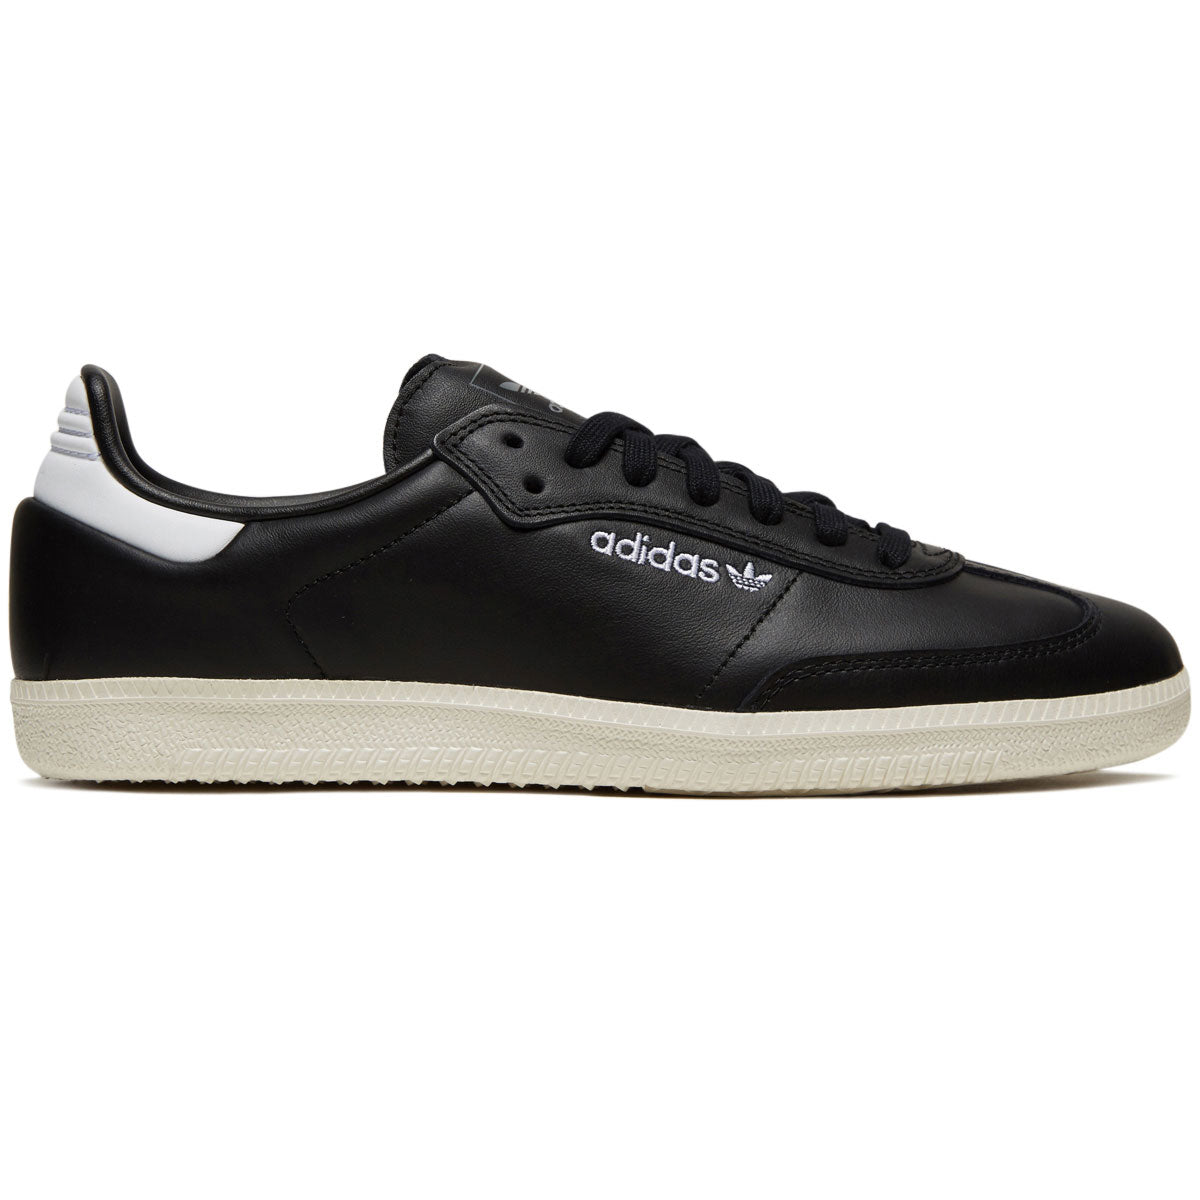 Adidas Samba ADV Shoes - Core Black/Grey/Chalk White image 1